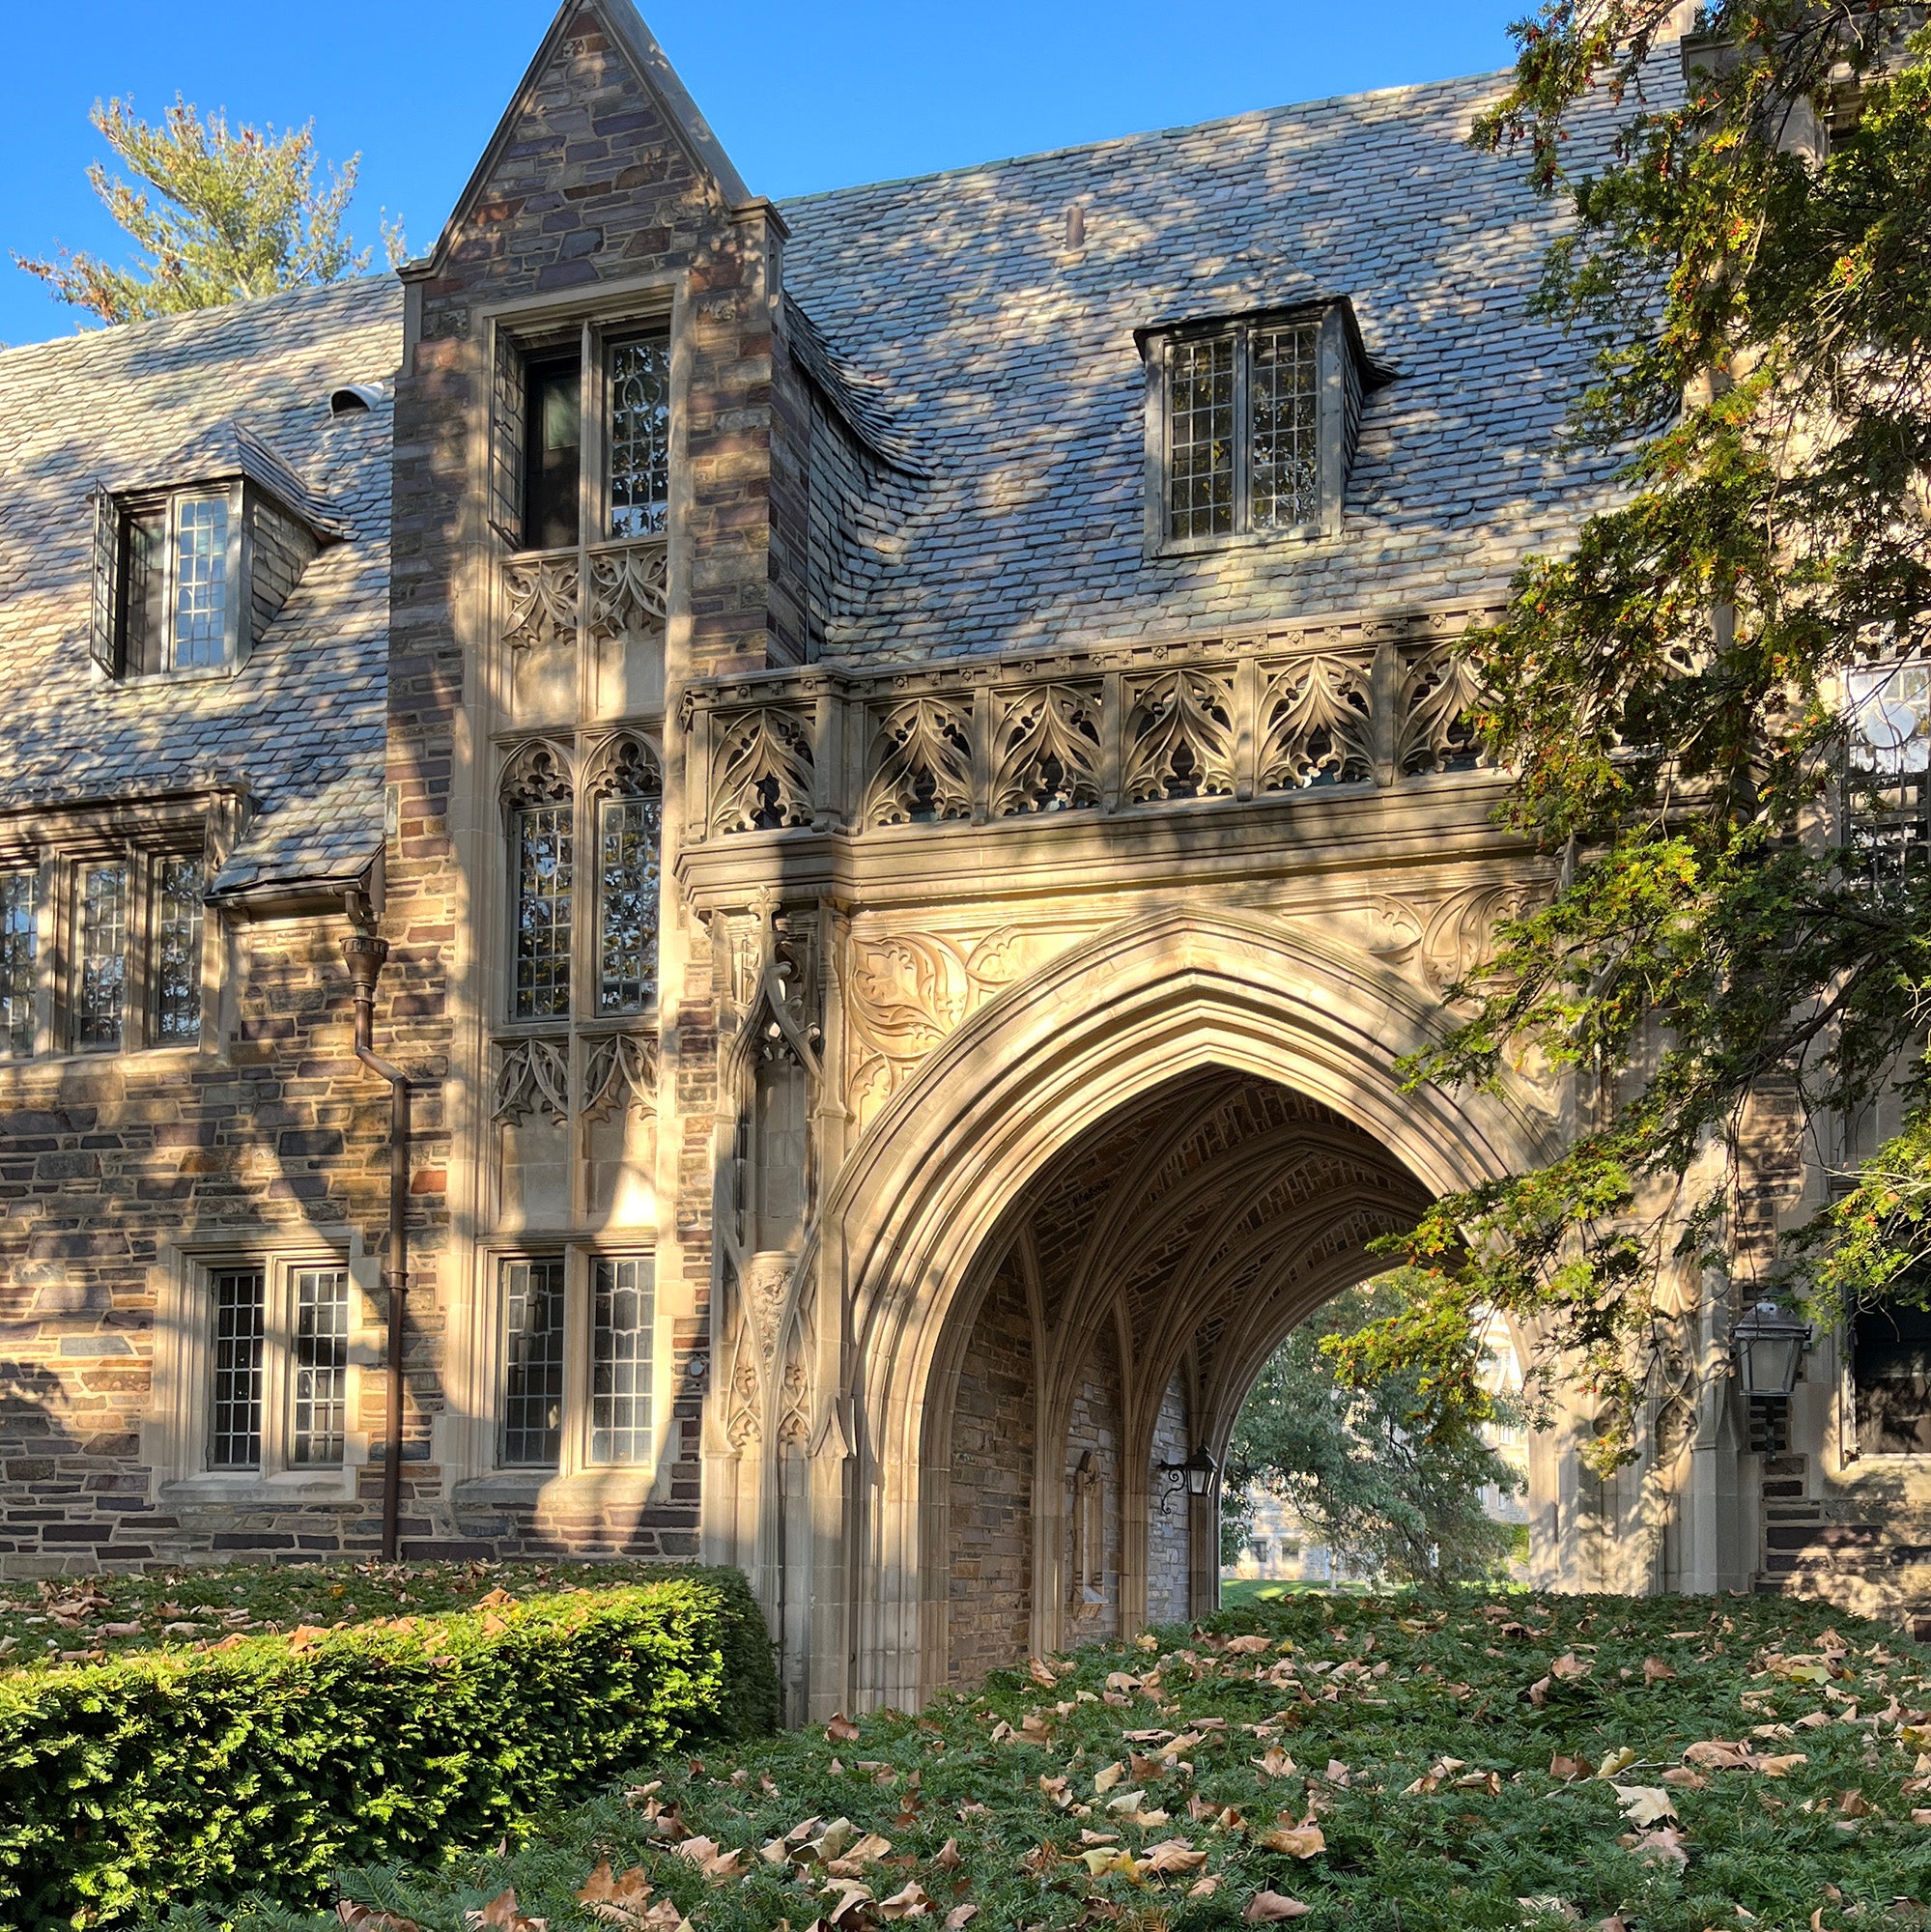 Gothic style stone archway at Princeton University.